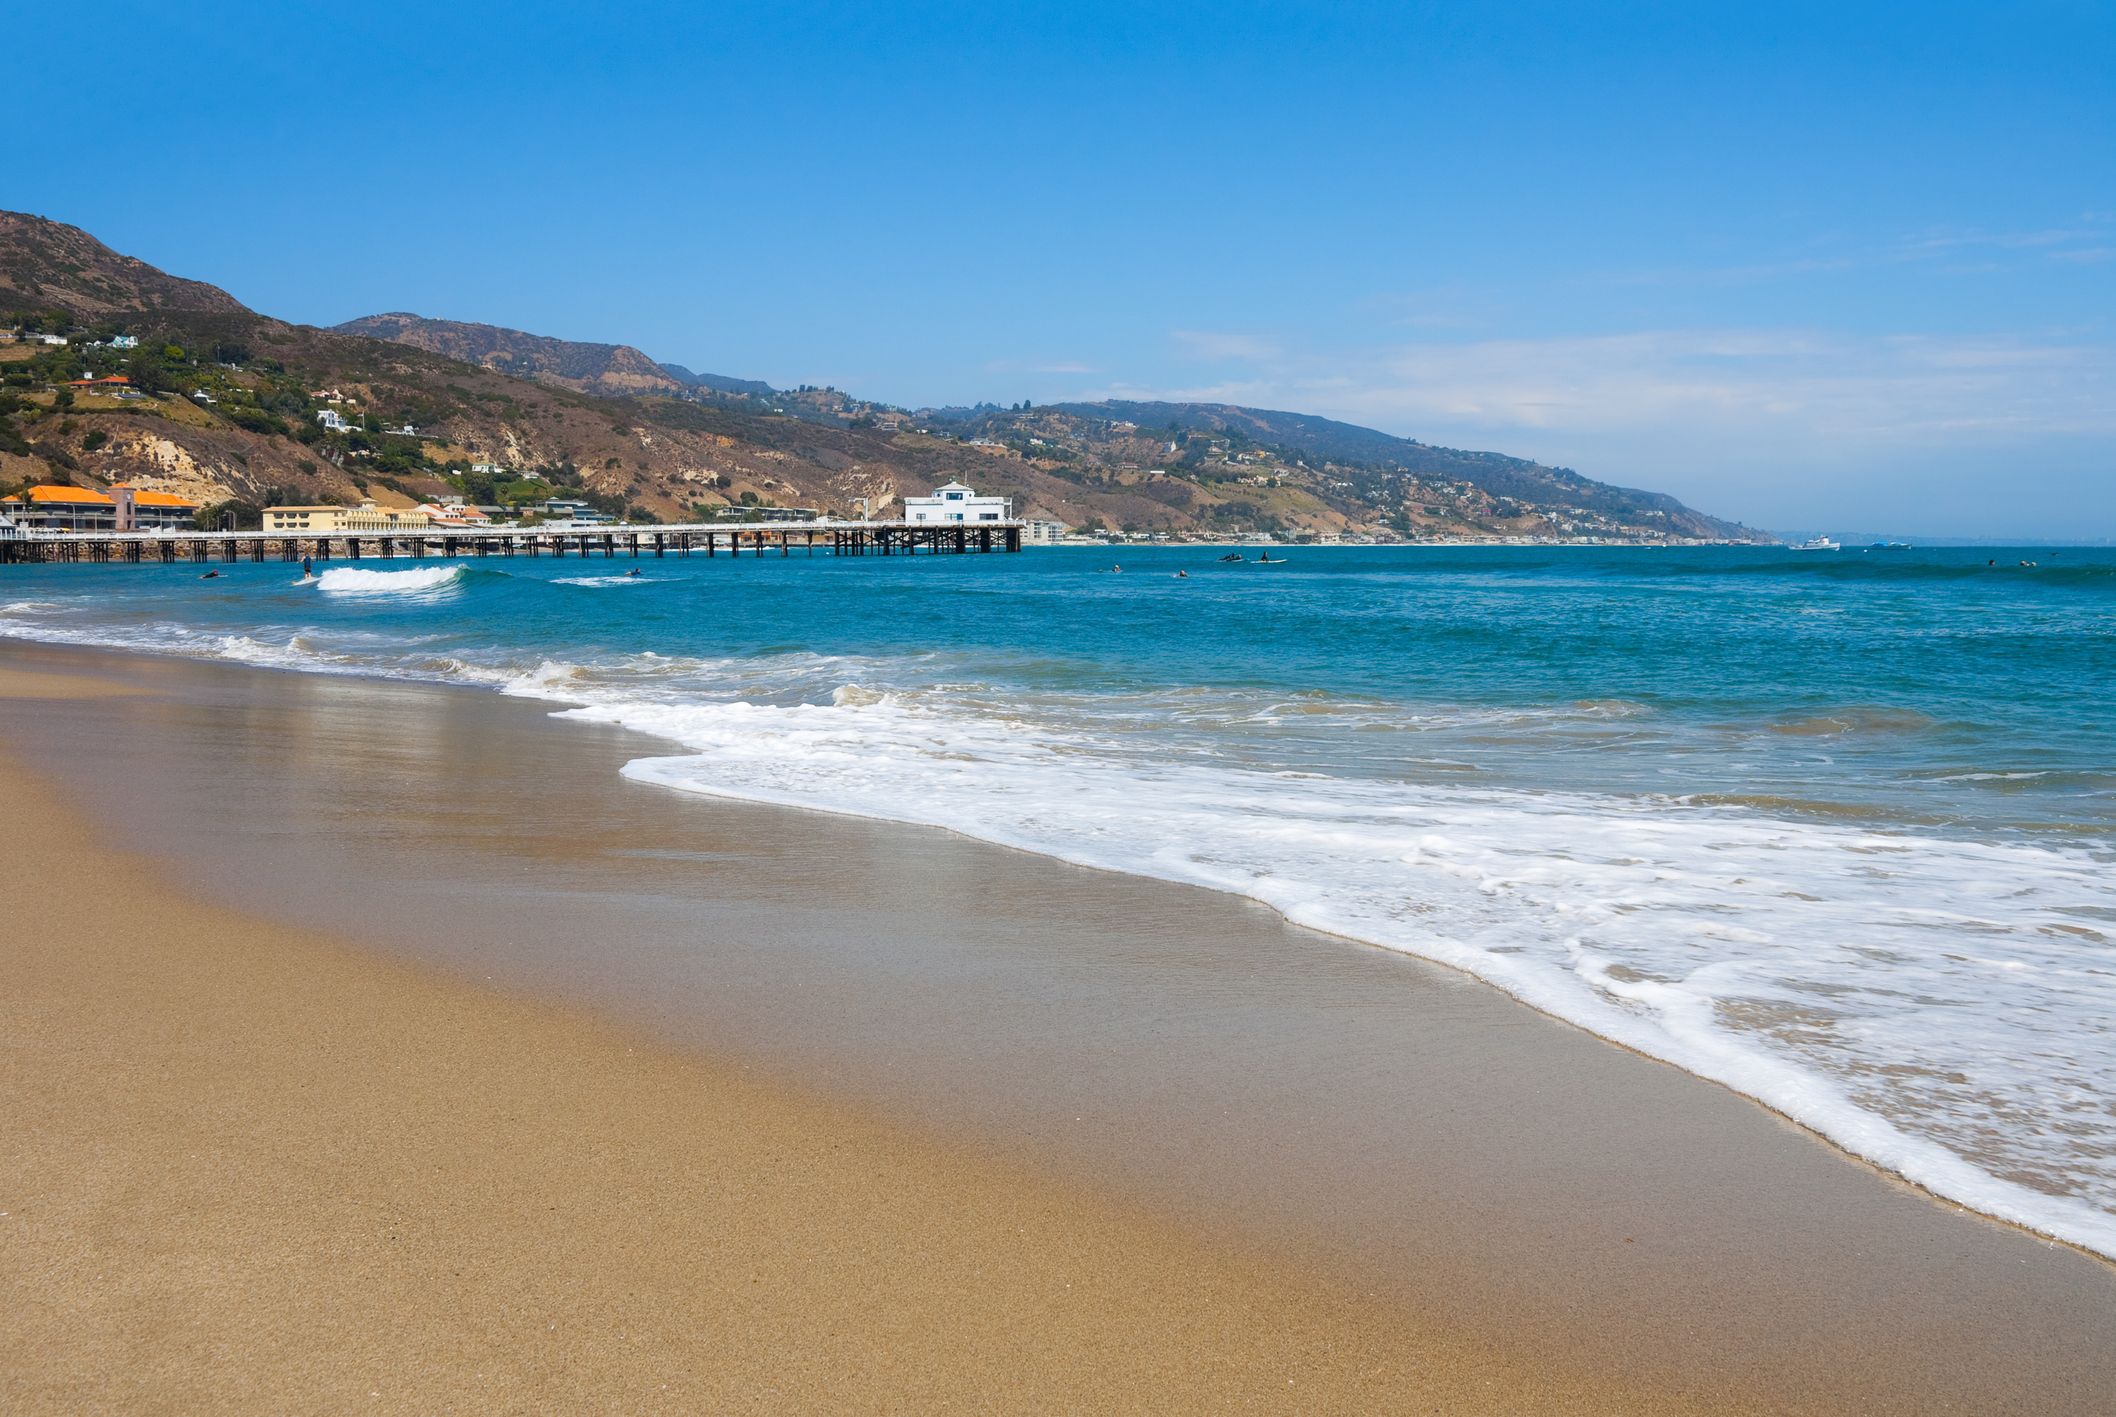 28 Best Beaches In California - Beautiful Golden State Shoreline Spots